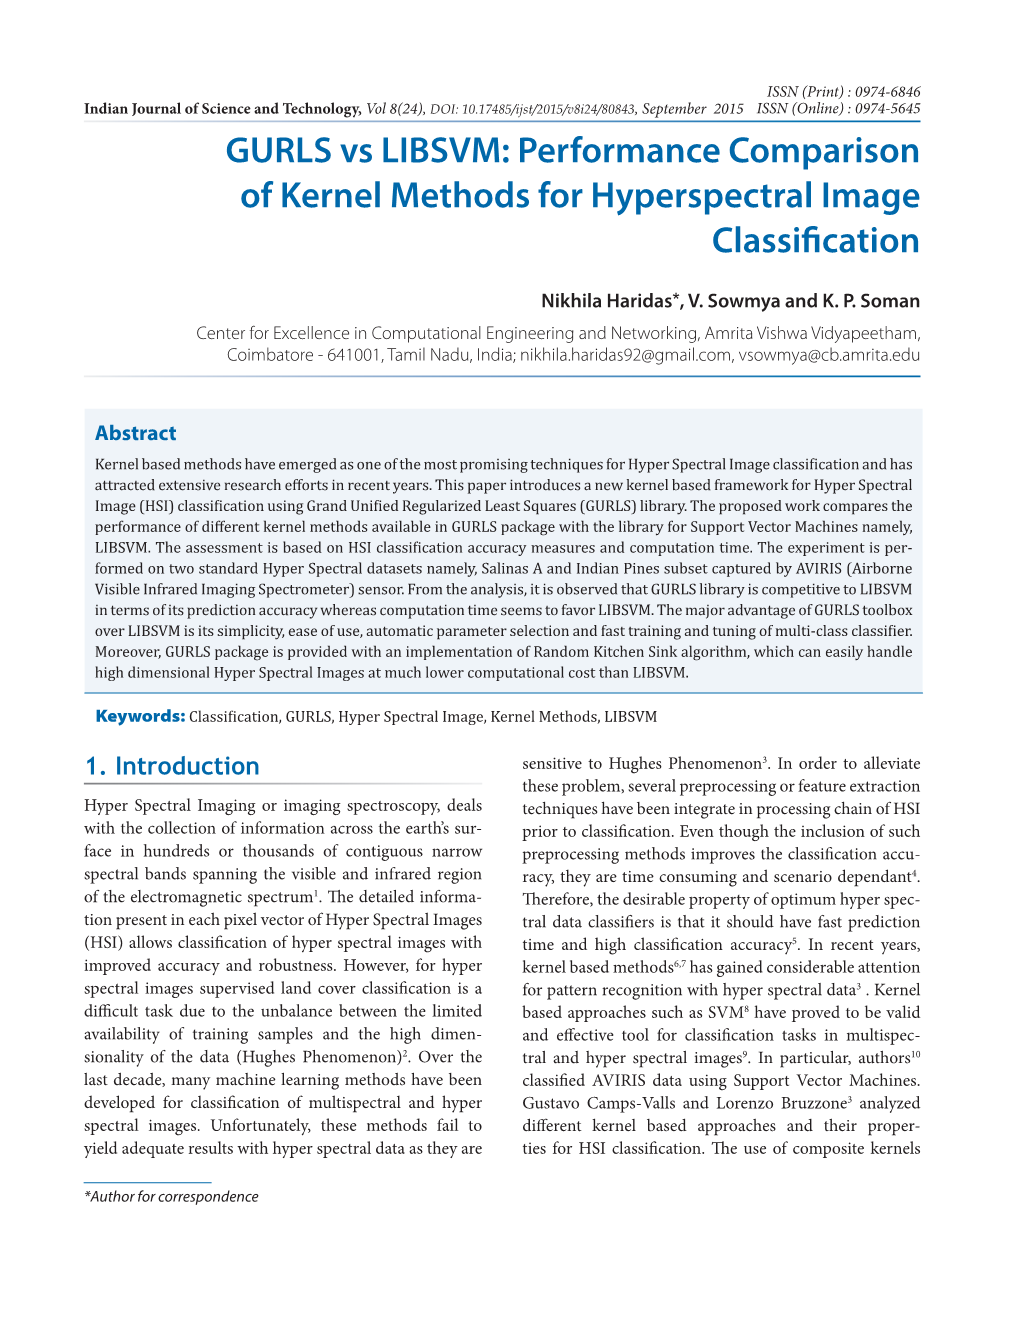 GURLS Vs LIBSVM: Performance Comparison of Kernel Methods for Hyperspectral Image Classification